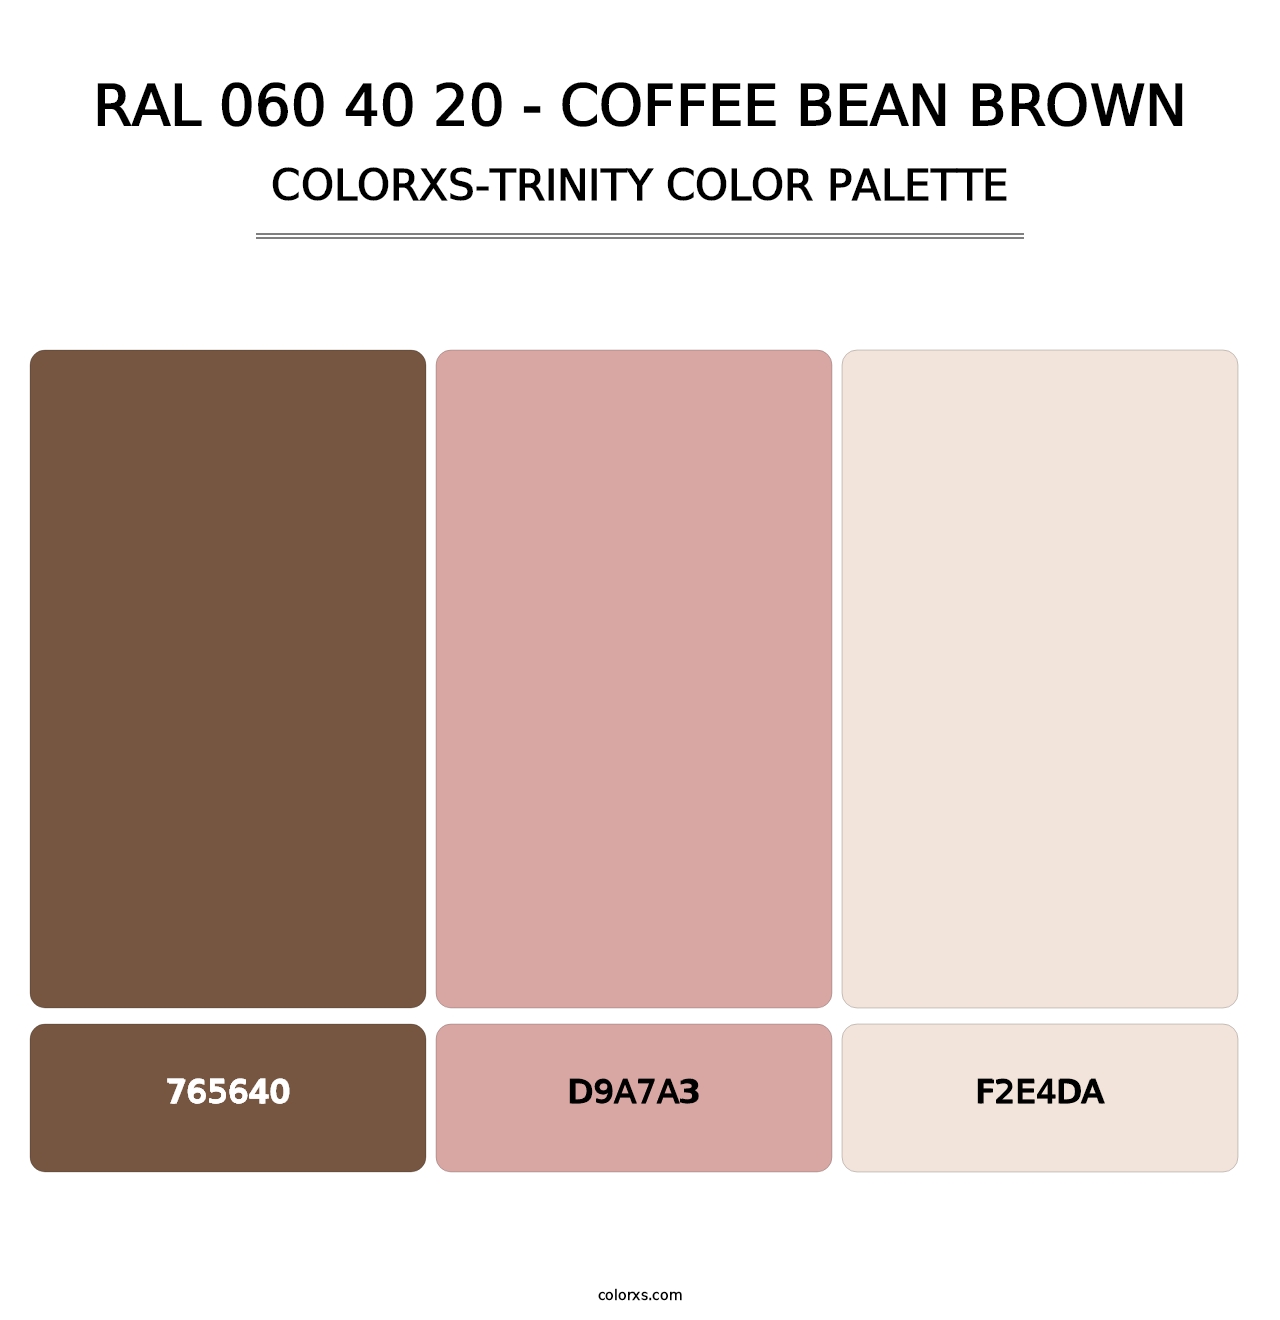 RAL 060 40 20 - Coffee Bean Brown - Colorxs Trinity Palette